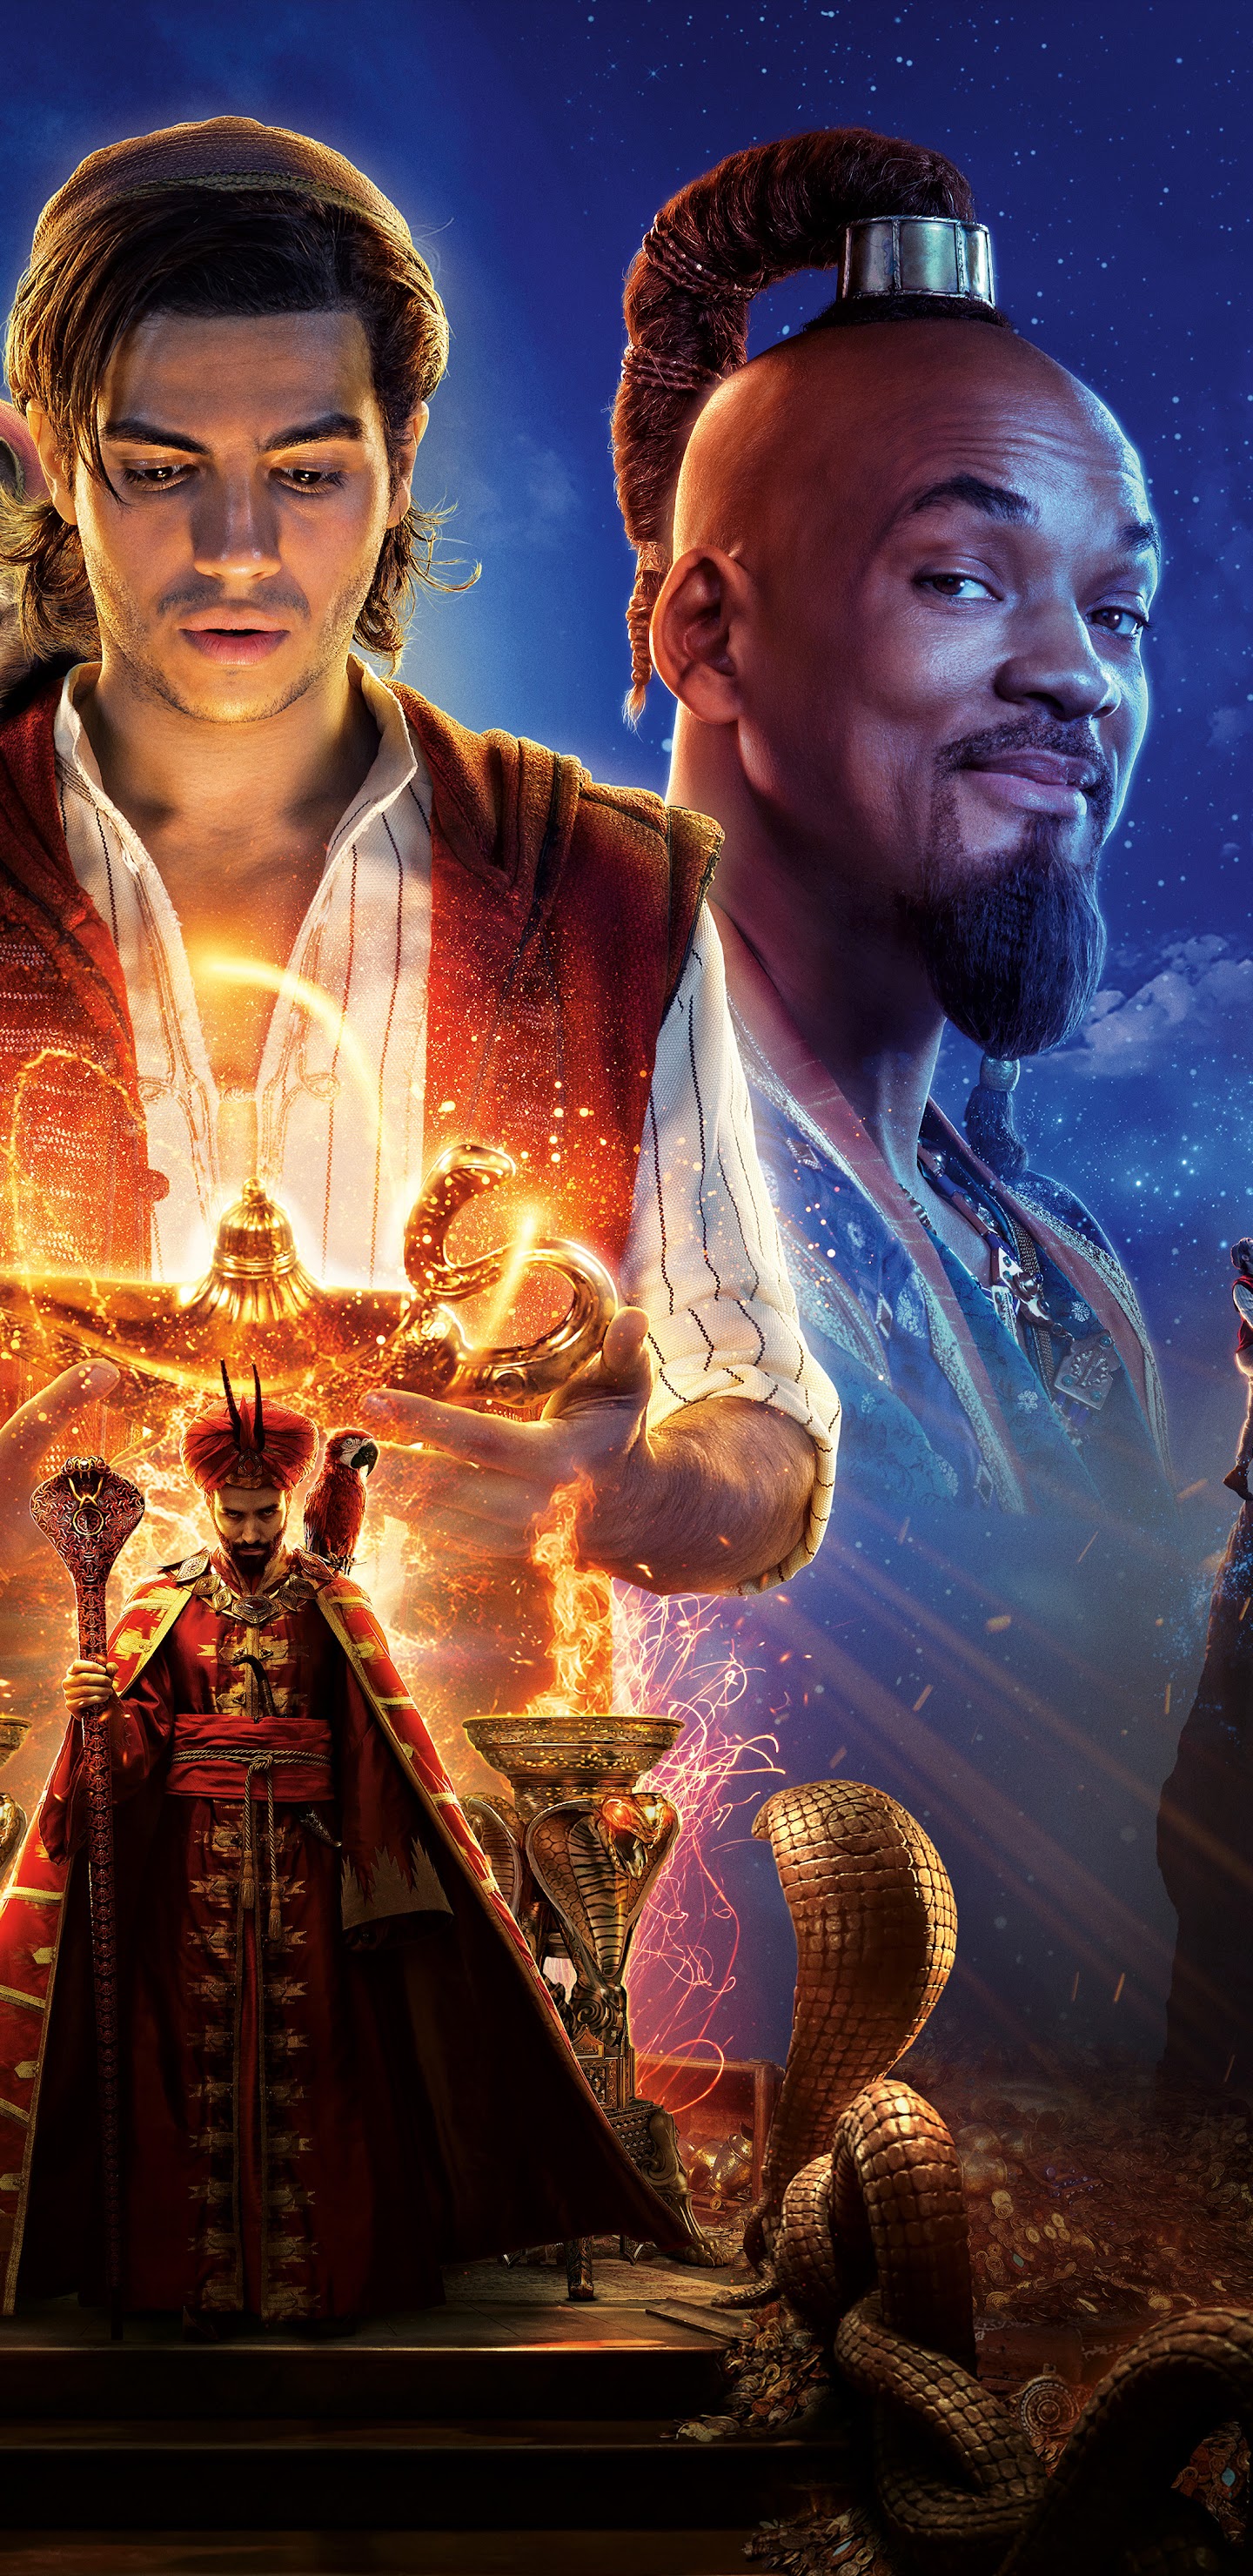 Disney Aladdin 2019 Movie Poster Wallpapers